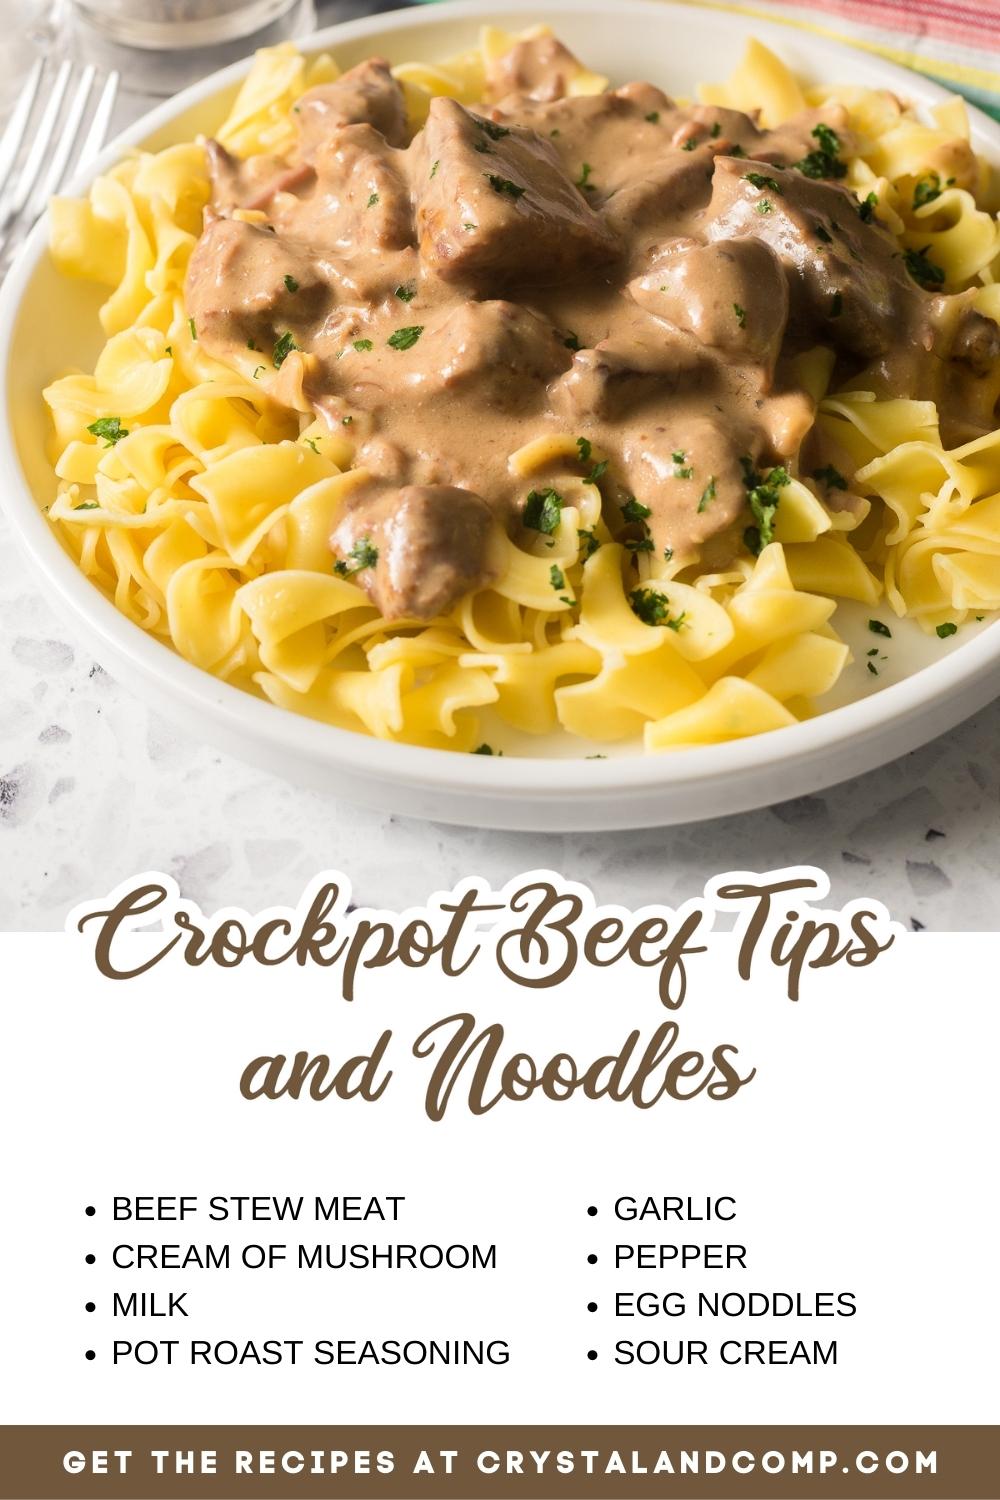 crockpot beef tips and noodles ingredients list